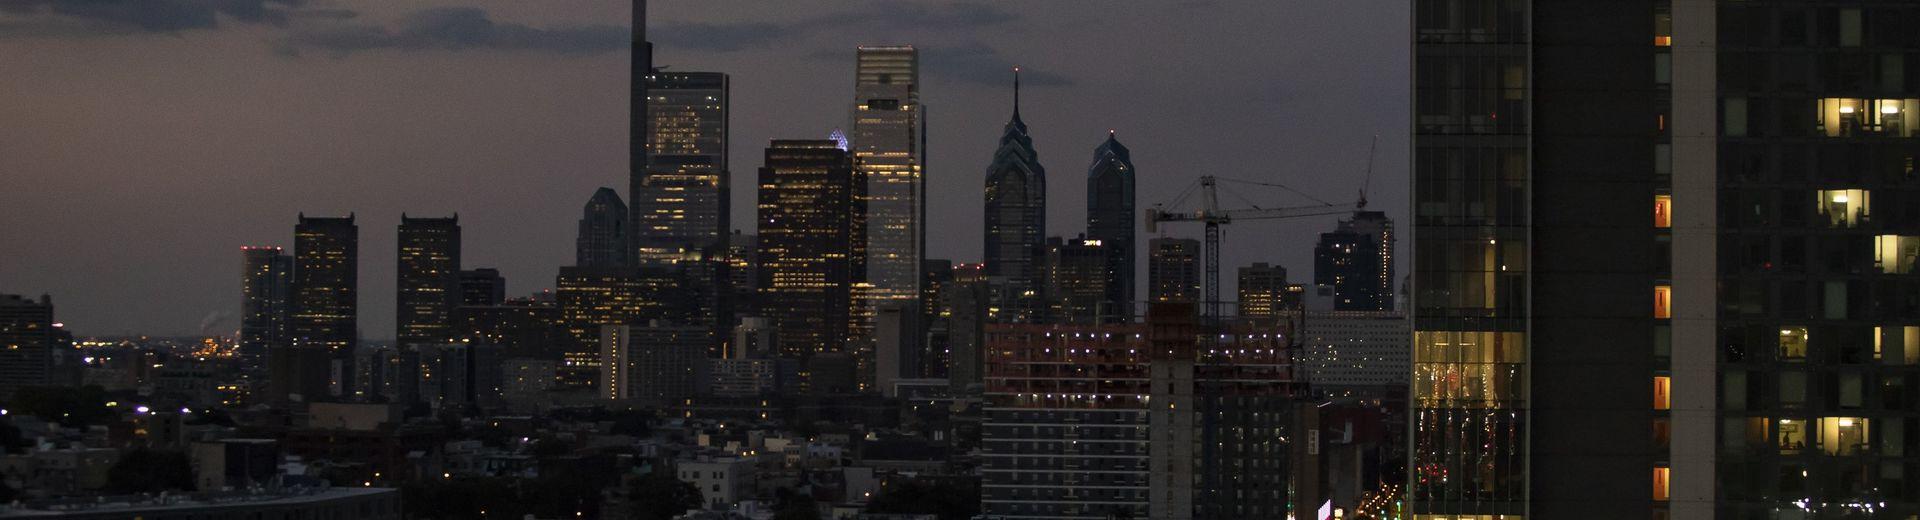 The downtown Philadelphia skyline at dusk.